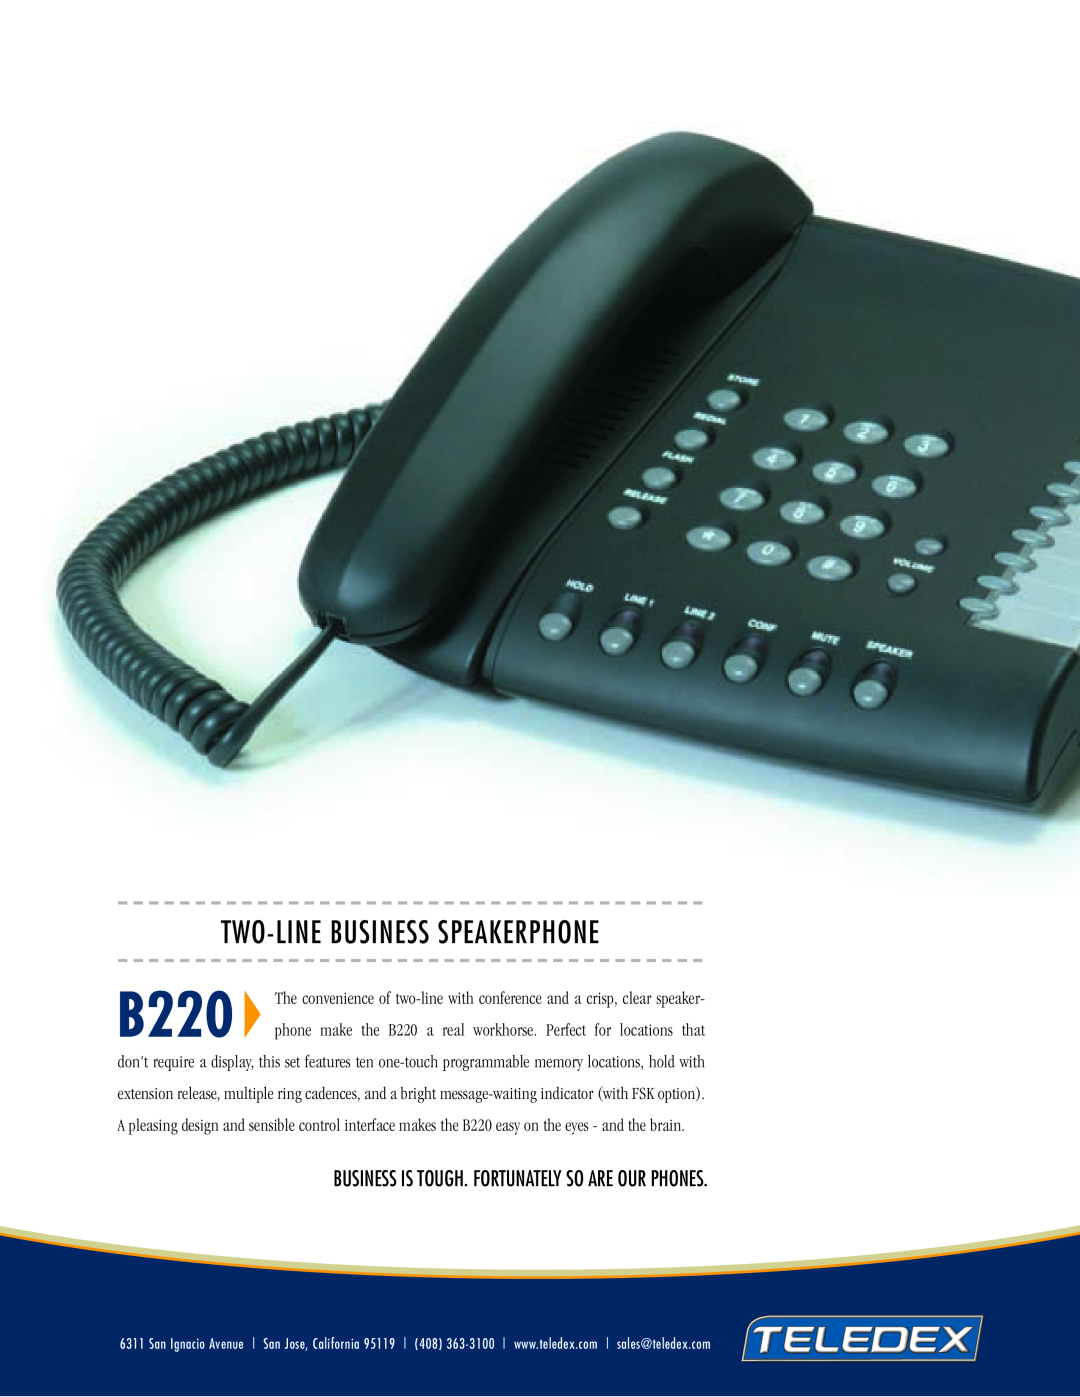 Teledex B220 manual users guide, speakerphone, two-line business 